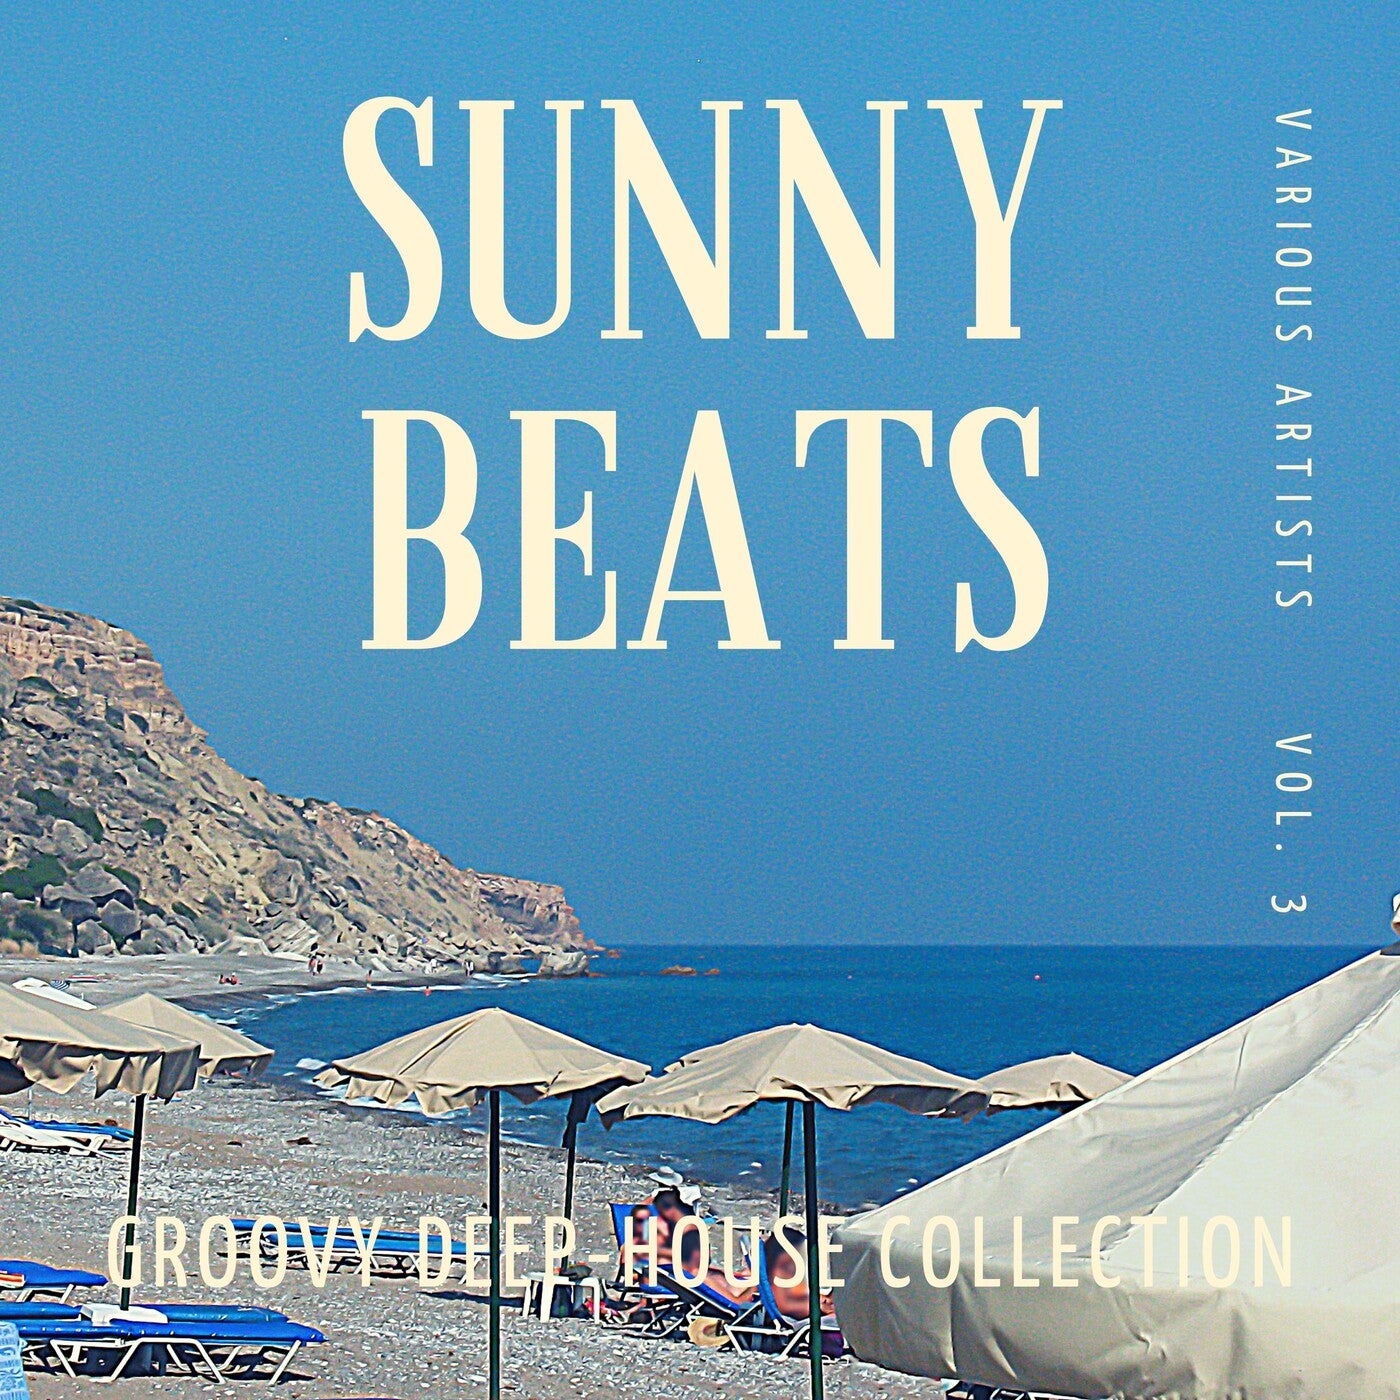 Sunny Beats (Groovy Deep-House Collection), Vol. 3